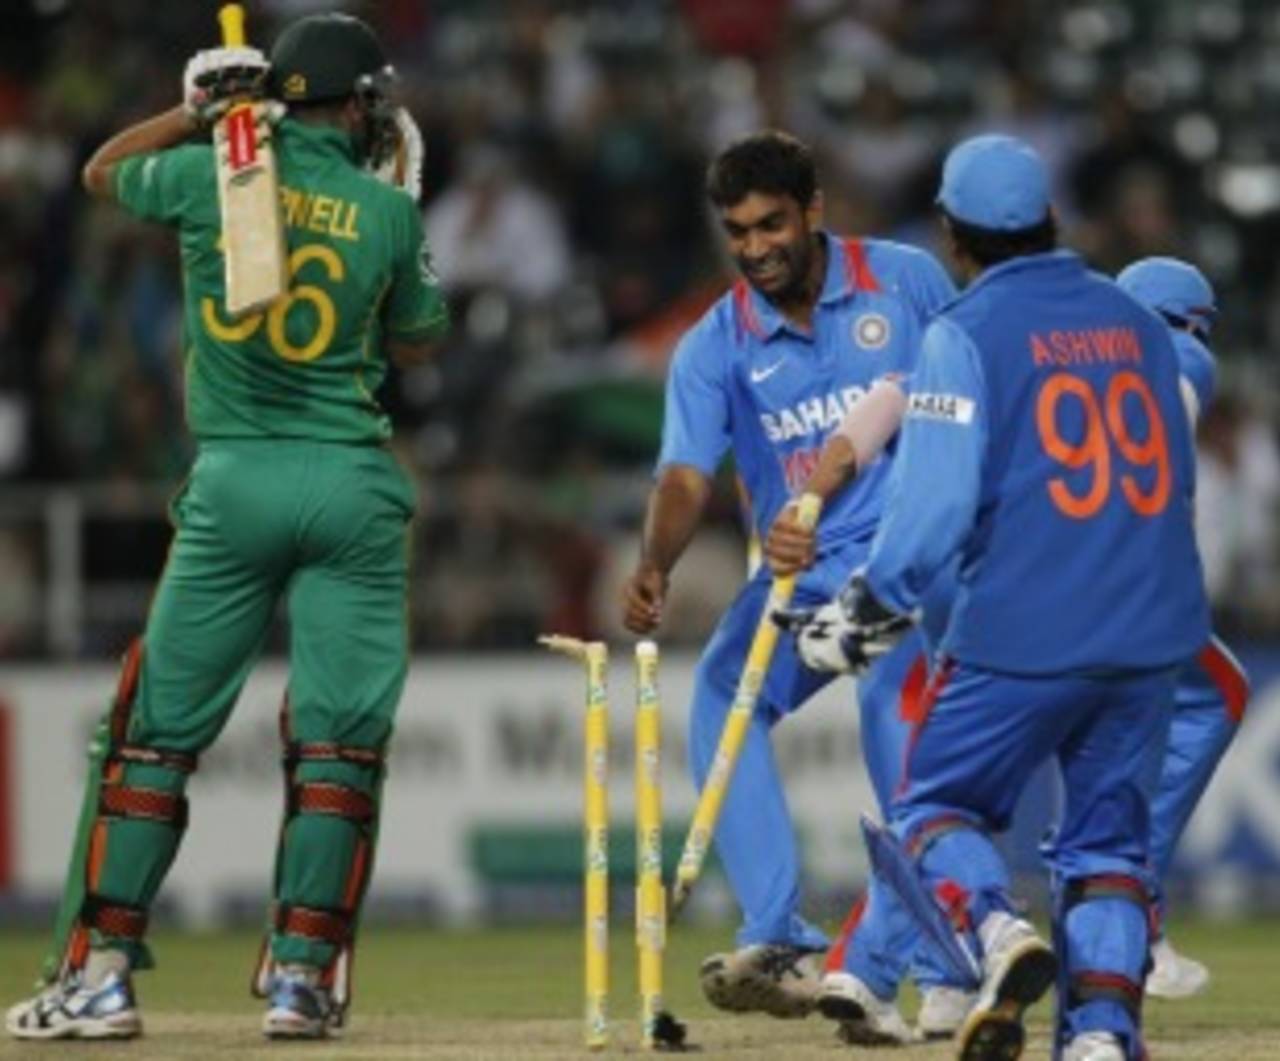 Munaf Patel picks up a souvenir after a terrific final over, South Africa v India, 2nd ODI, Johannesburg, January 15, 2011